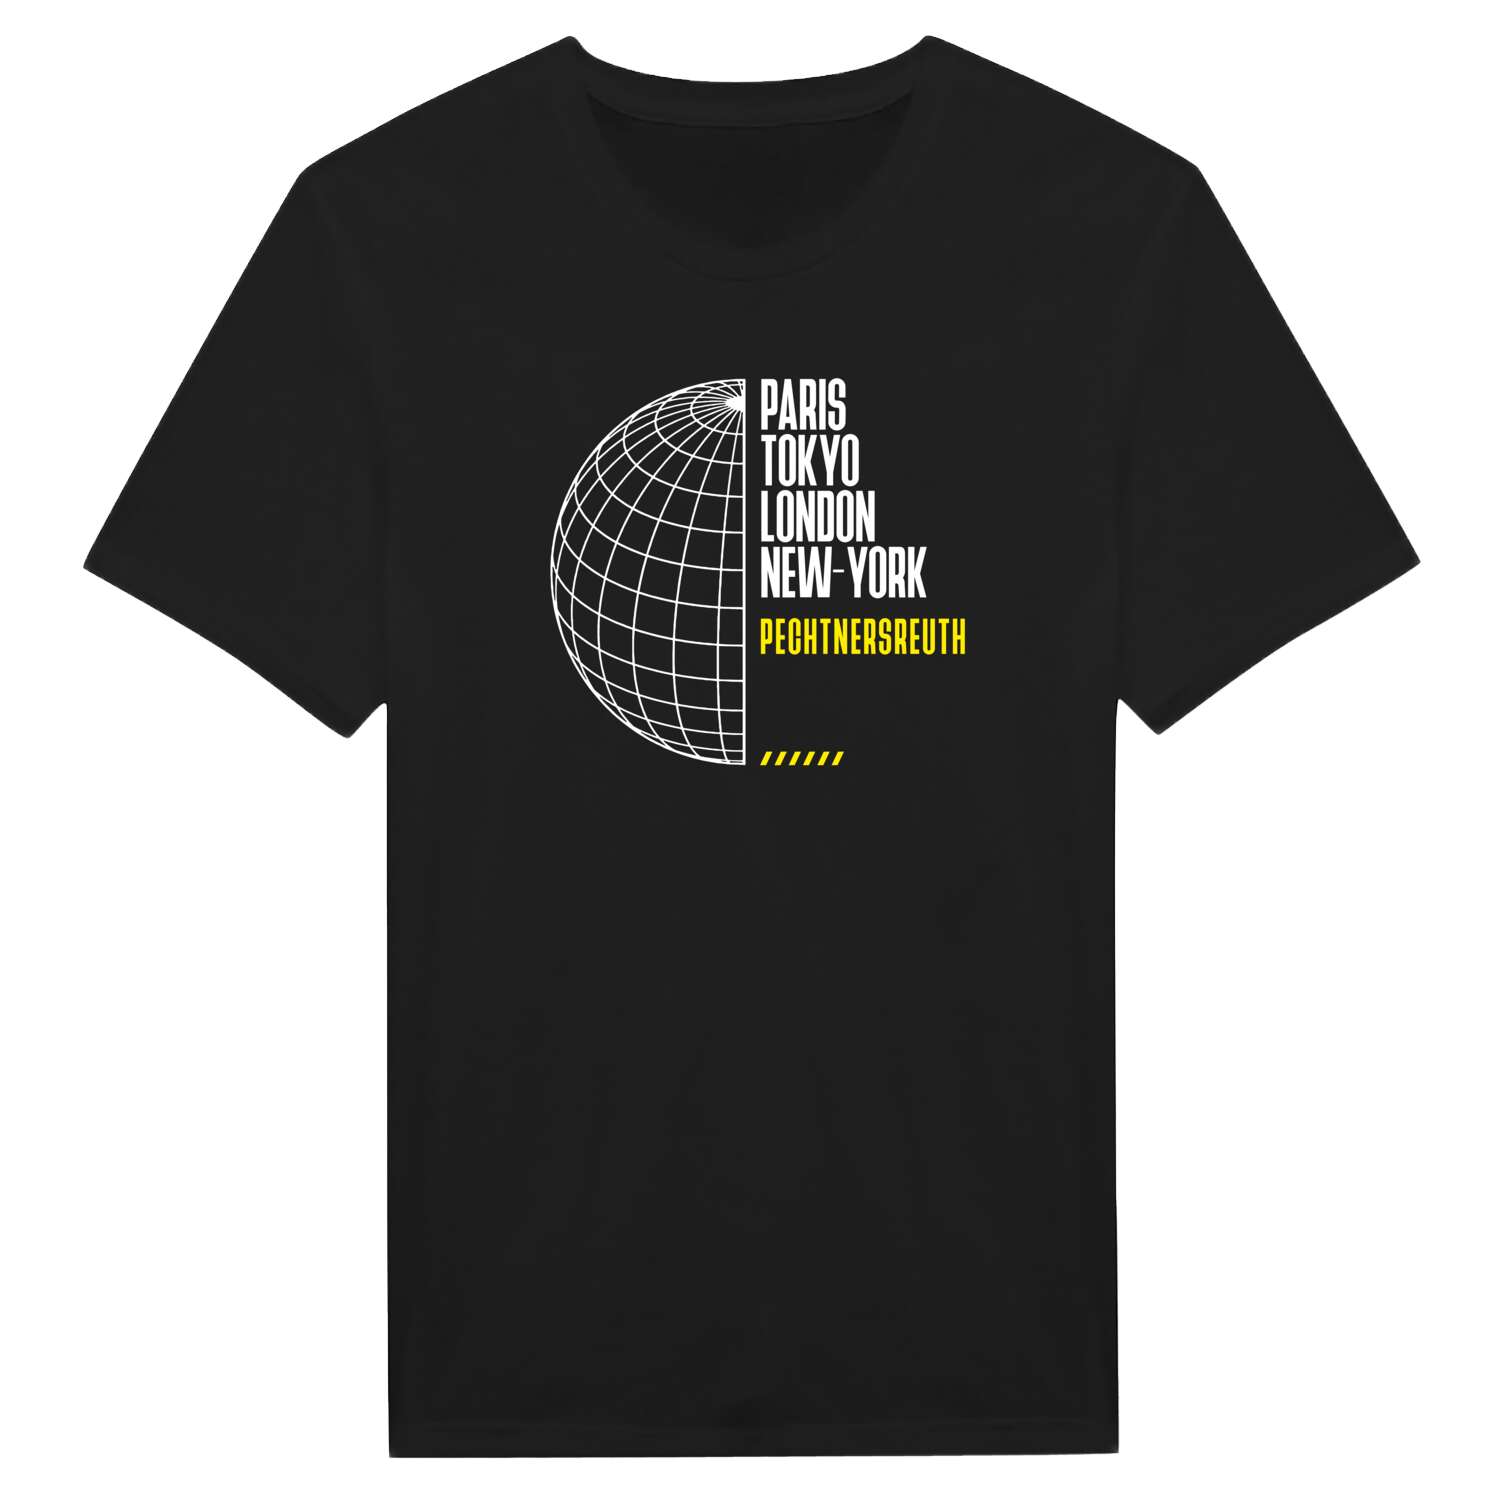 Pechtnersreuth T-Shirt »Paris Tokyo London«